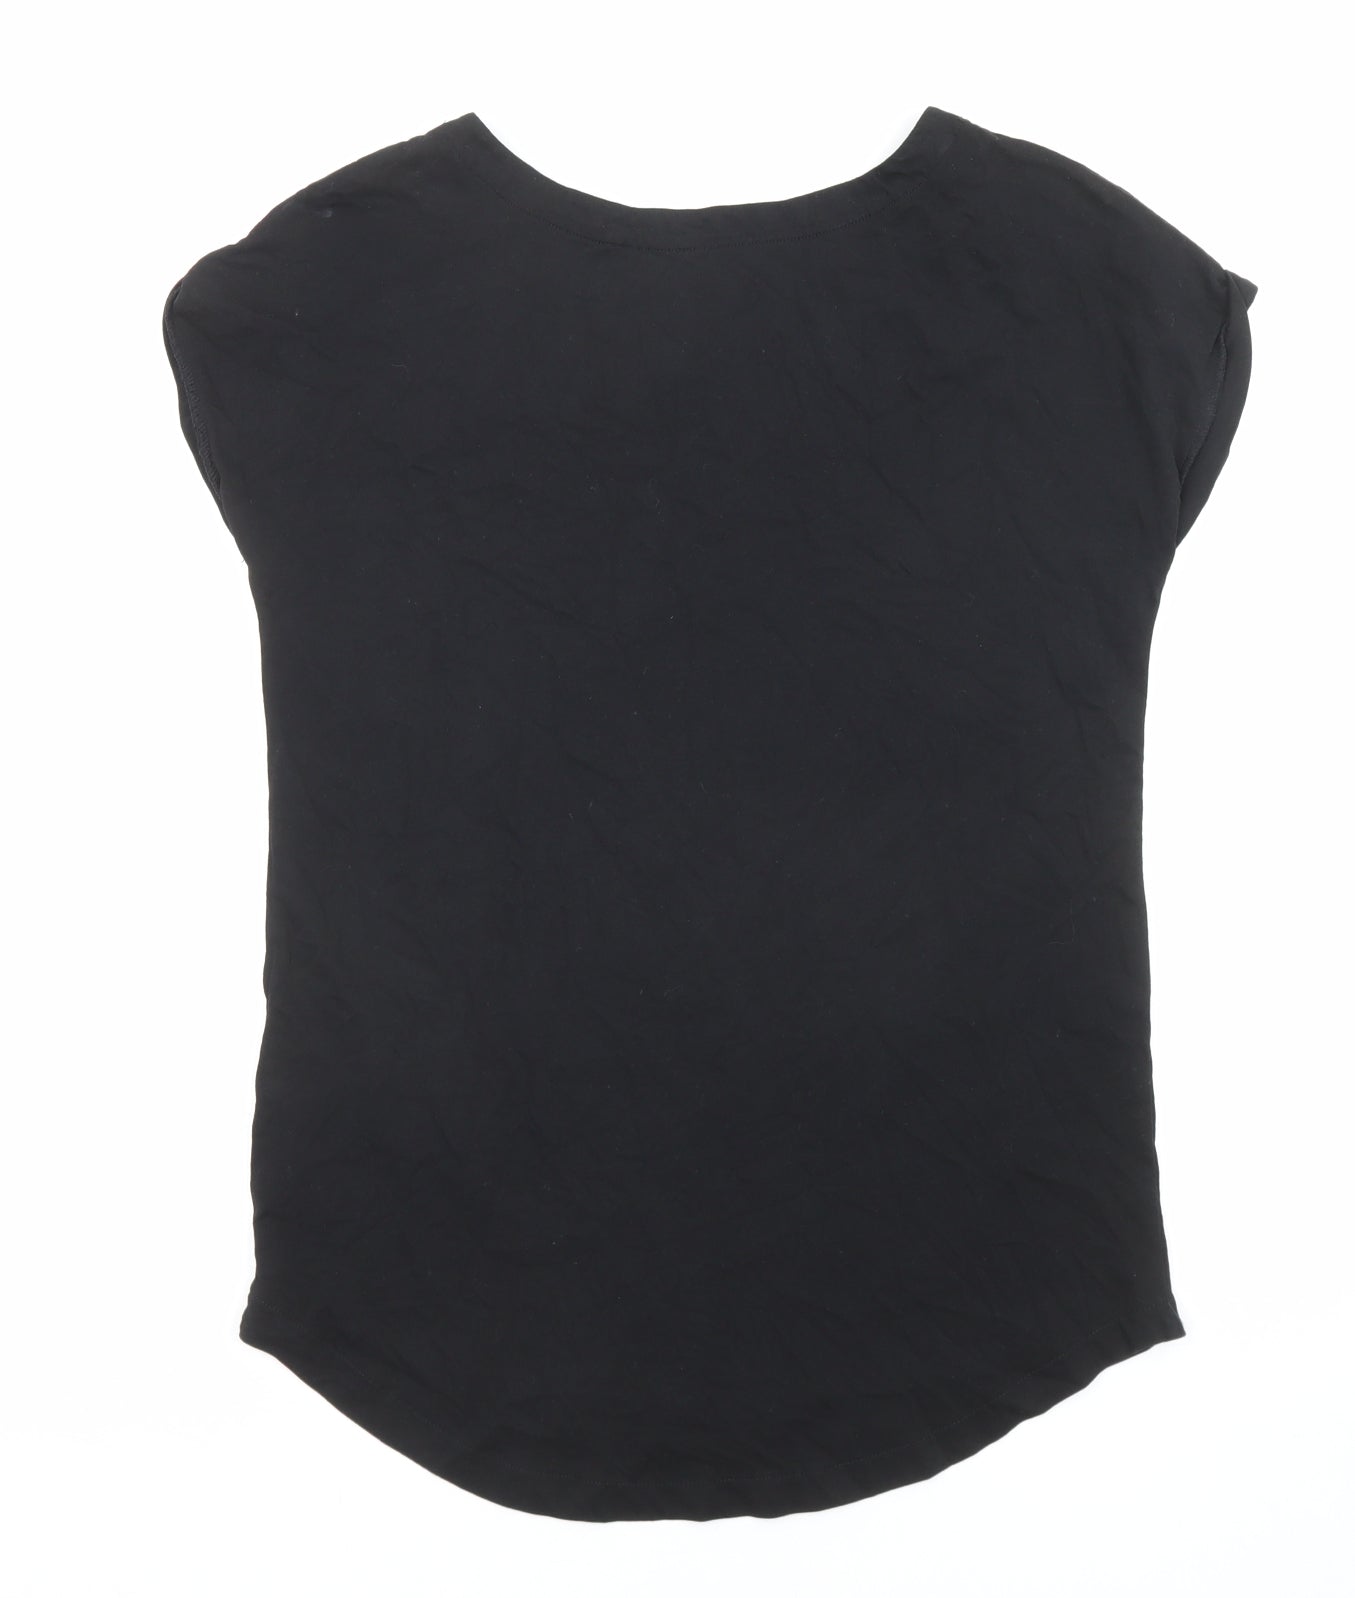 NEXT Womens Black Cotton Basic T-Shirt Size 8 Round Neck - Kellogg's, Frosties